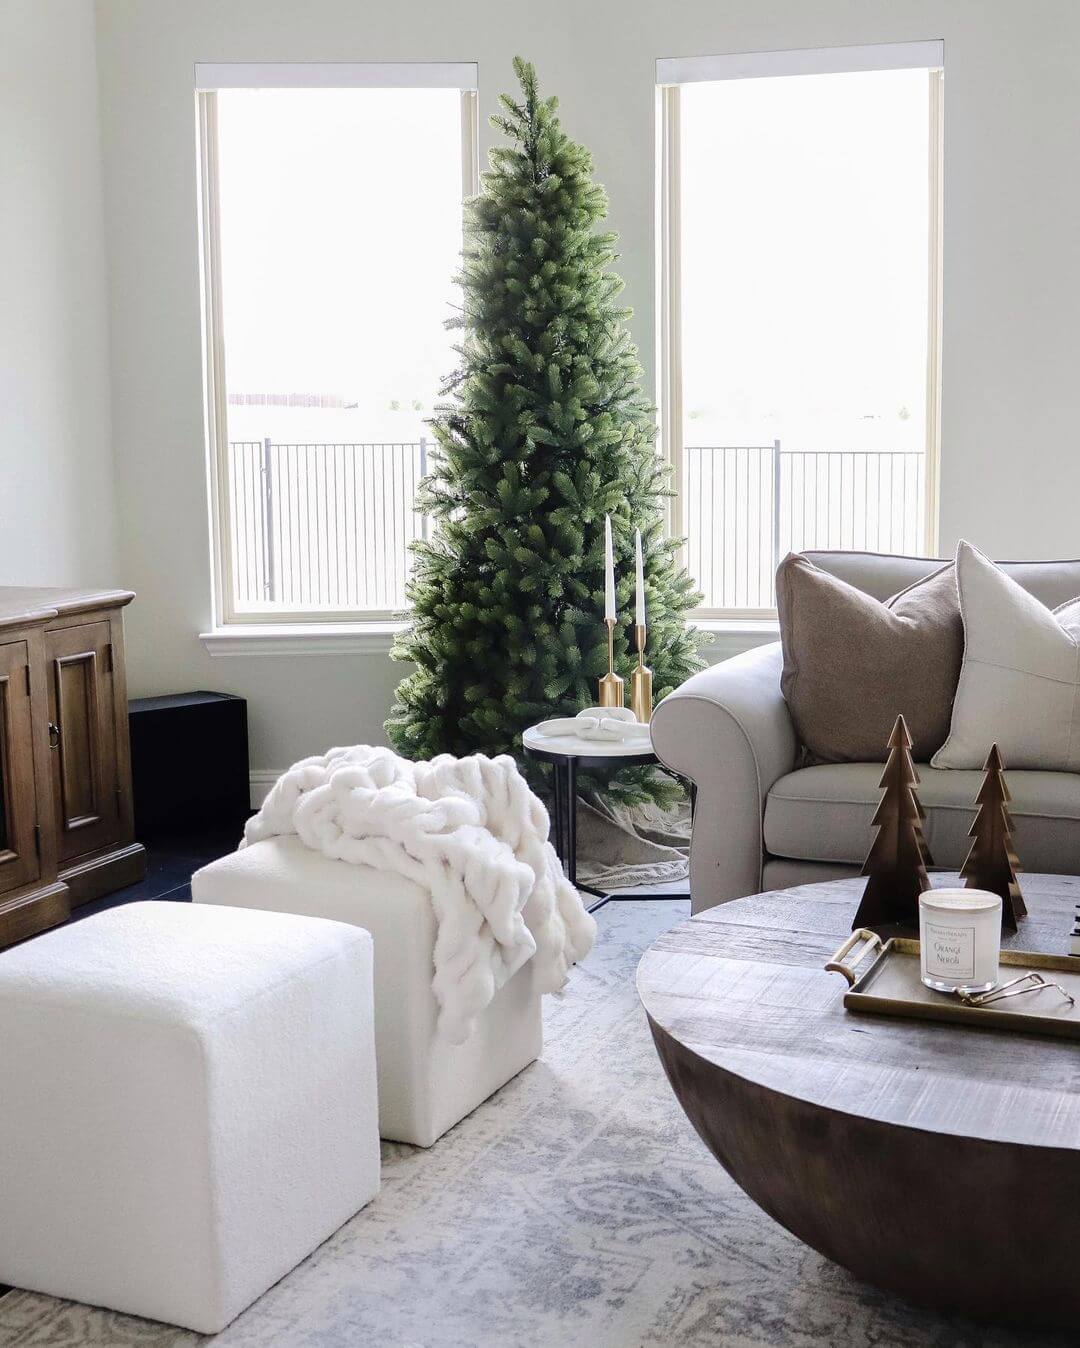 King of Christmas 7.5' Royal Fir Slim Quick-Shape Artificial Christmas Tree with 650 Warm White & Multi-Color LED Lights